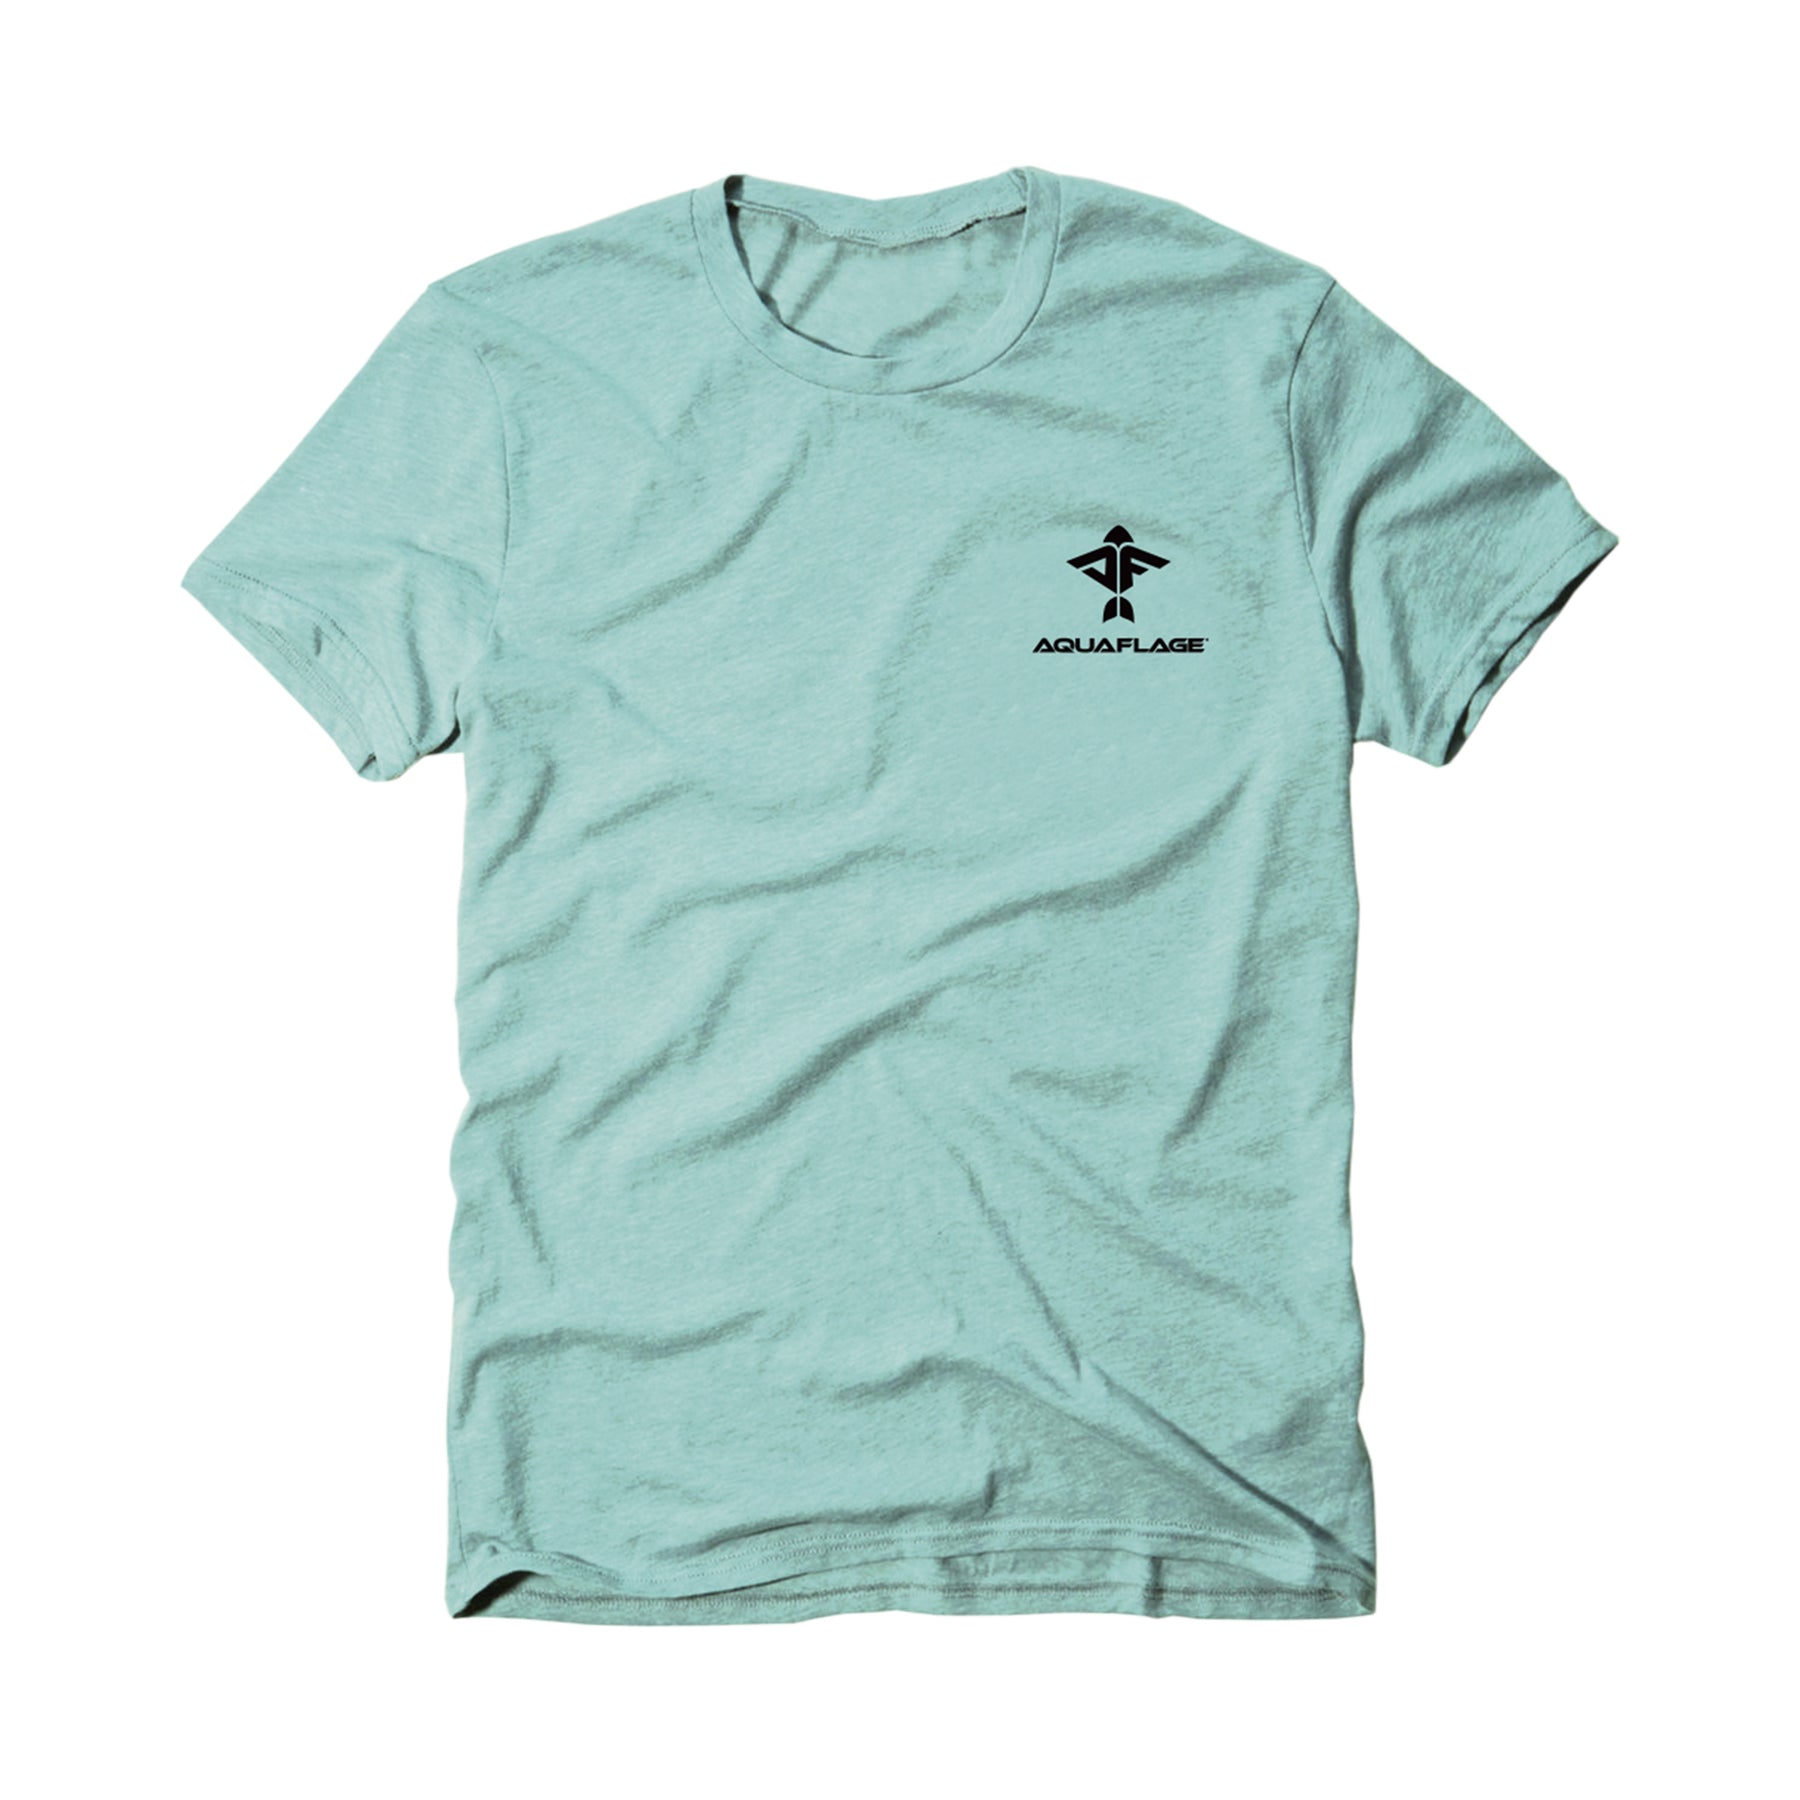 Boating Short Sleeve Mint – T-Shirt Men\'s - Aquaflage